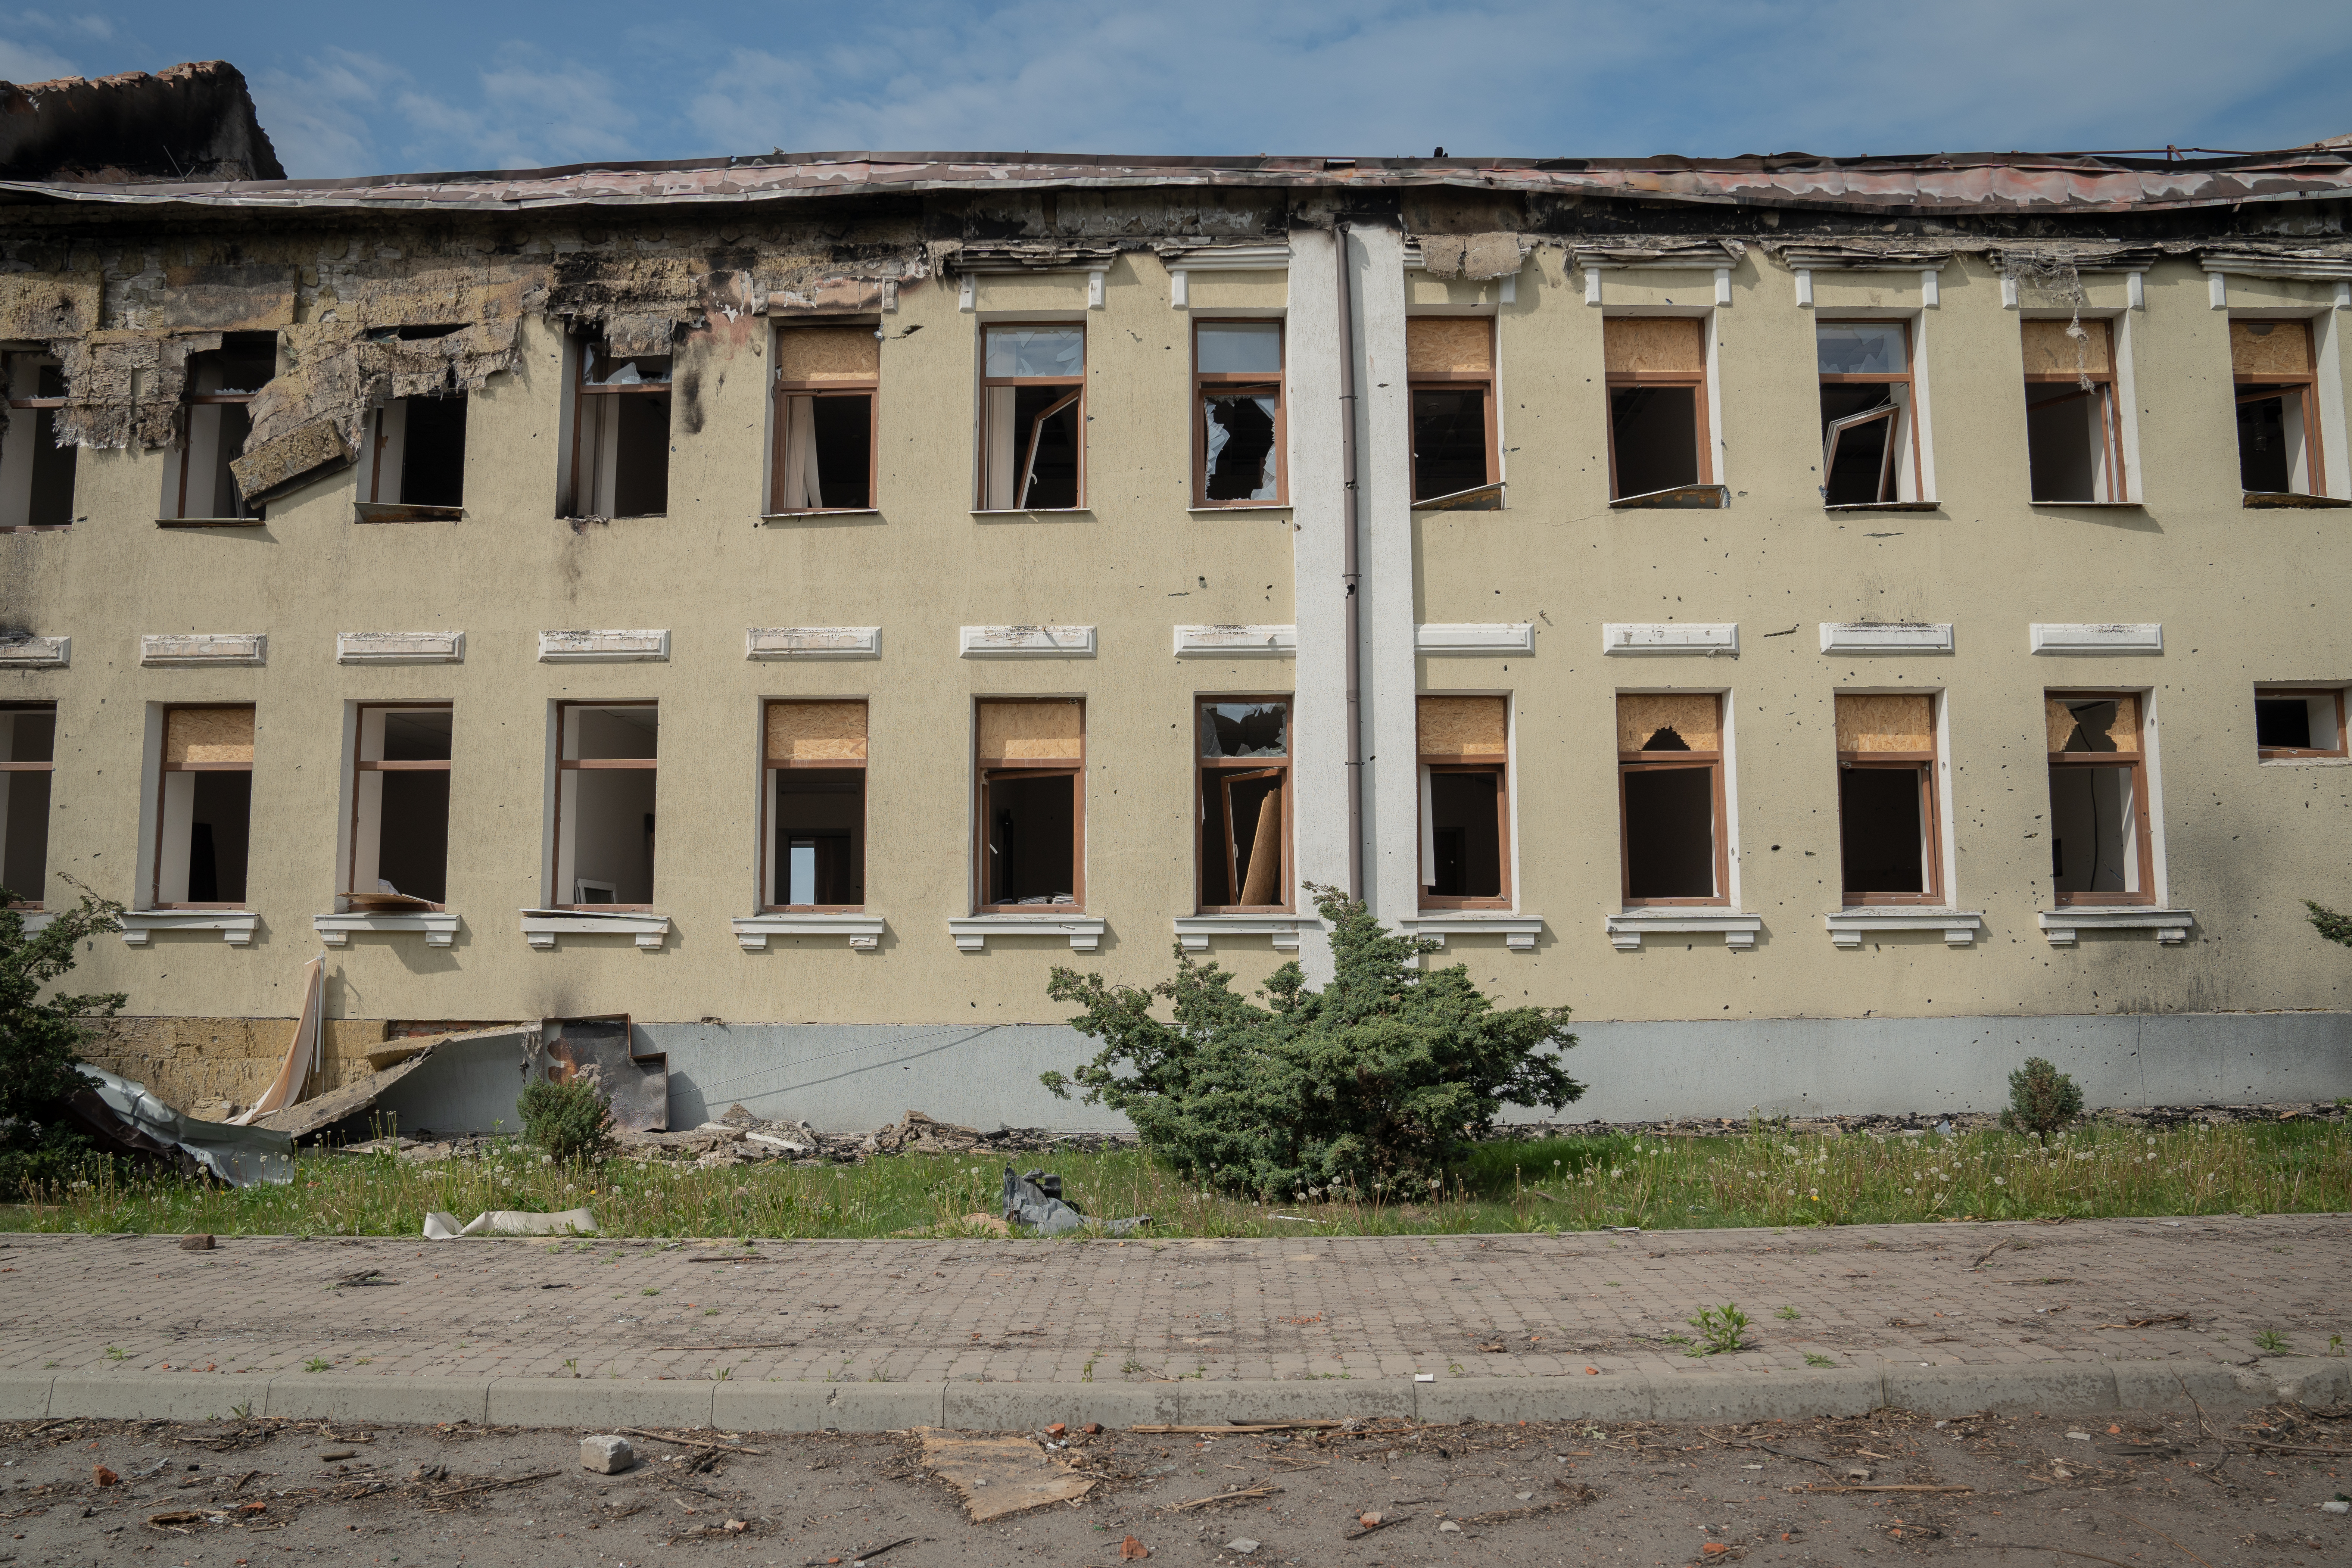 A destroyed building in Vovchansk / Photo: Yana Sliemzina for Gwara Media